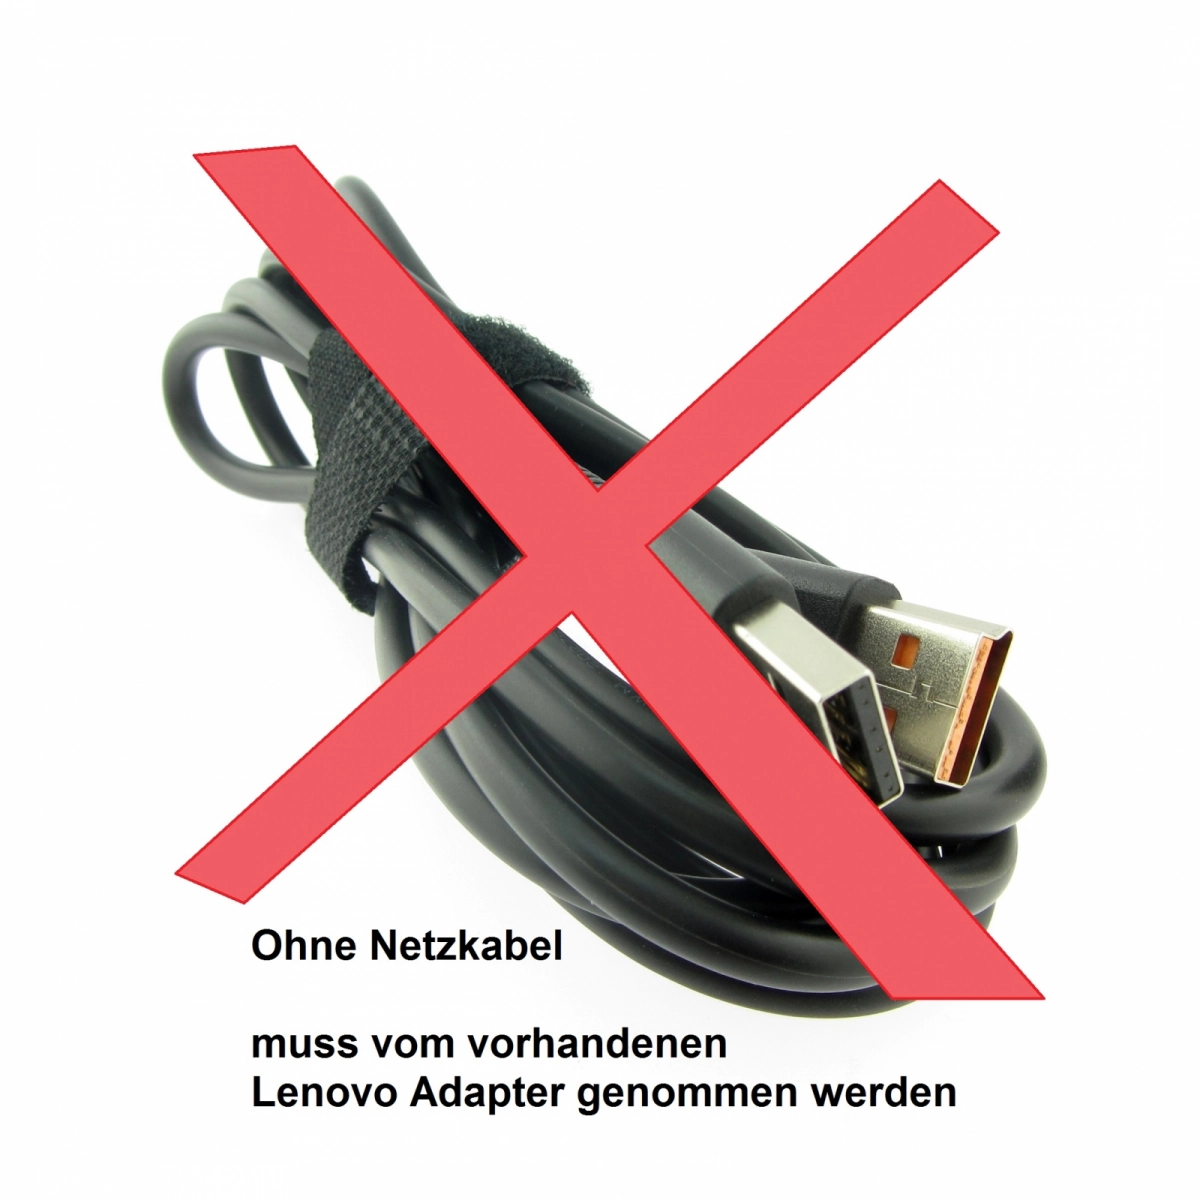 Original Netzteil für LENOVO ADL40WLH, 20V, 2A, Stecker USB, ohne USB-Kabel